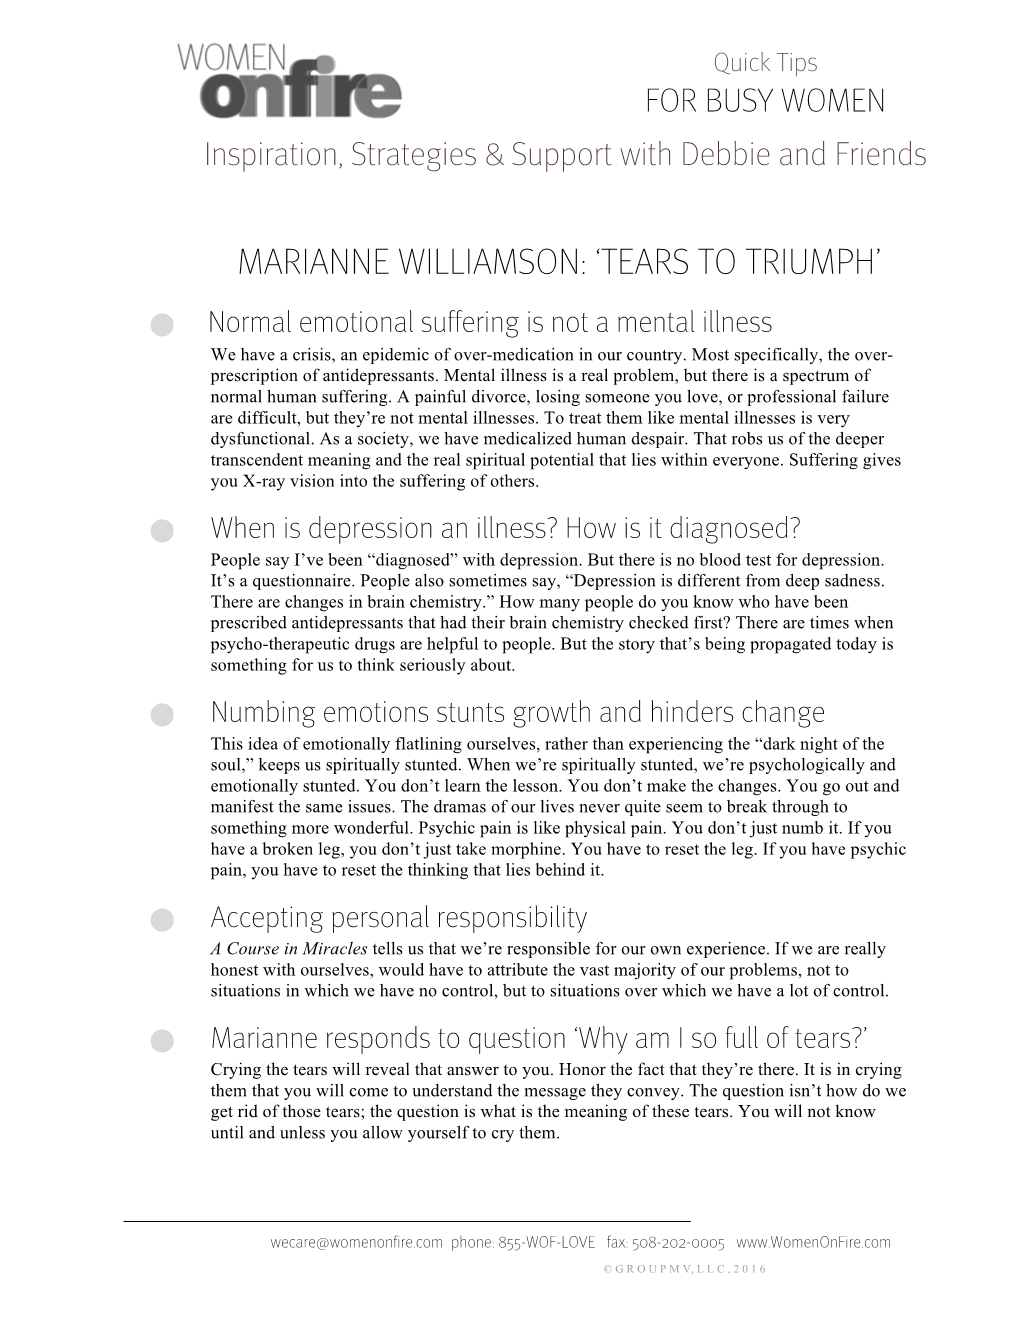 Marianne Williamson: 'Tears to Triumph'